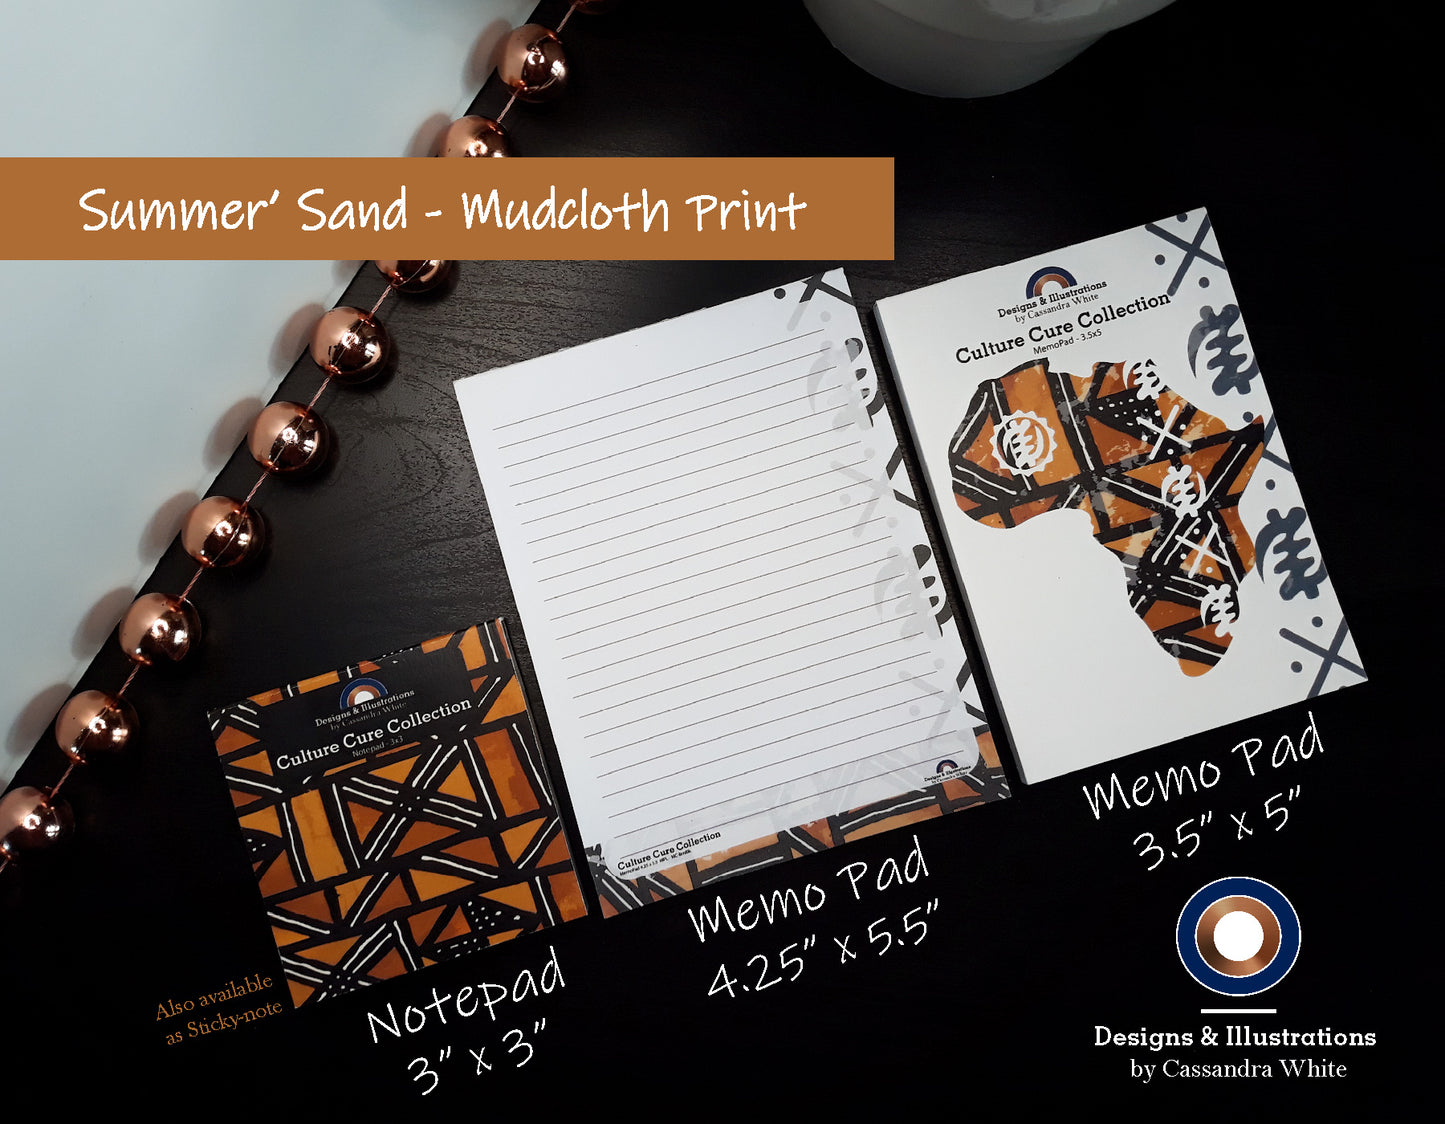 Summer Sand - Mudcloth Print Notepads & Memo Pads